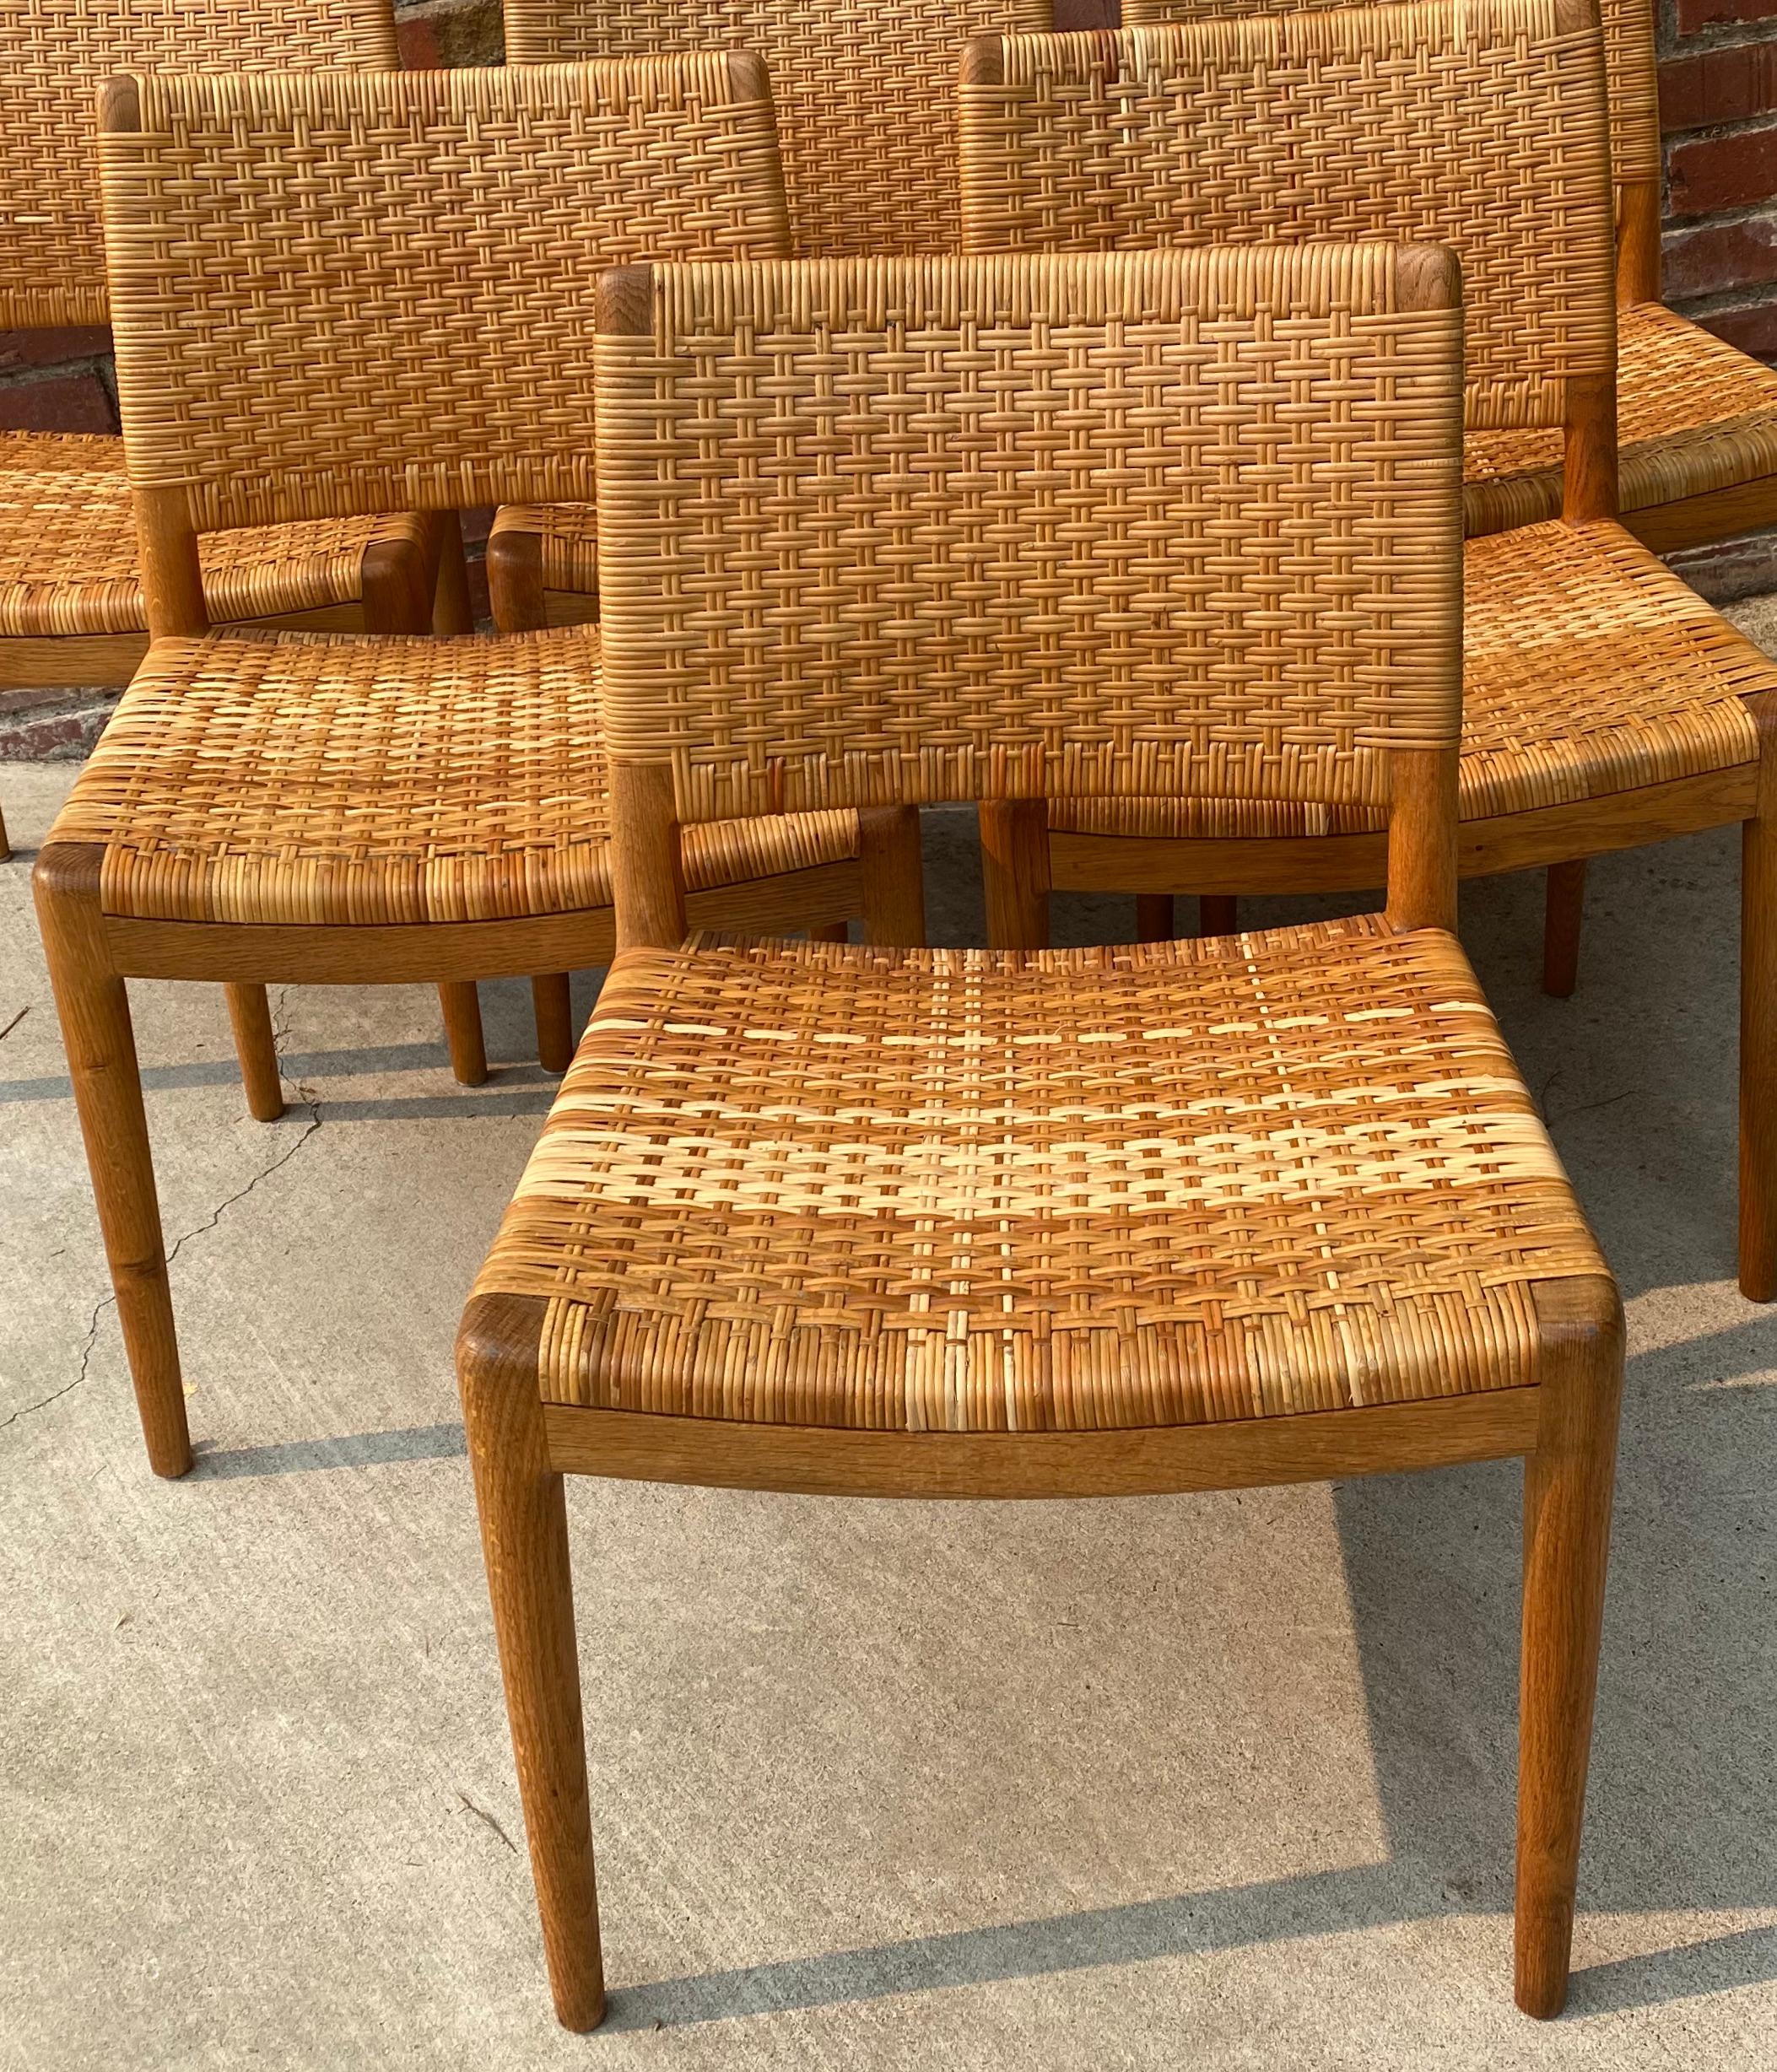 Set of six Hans Wegner for Johannes Hansen Danish modern dining chairs, circa 1960

Mid-Century Modern dining chairs

Danish oak frames with wicker seats & backs

Measures: 20